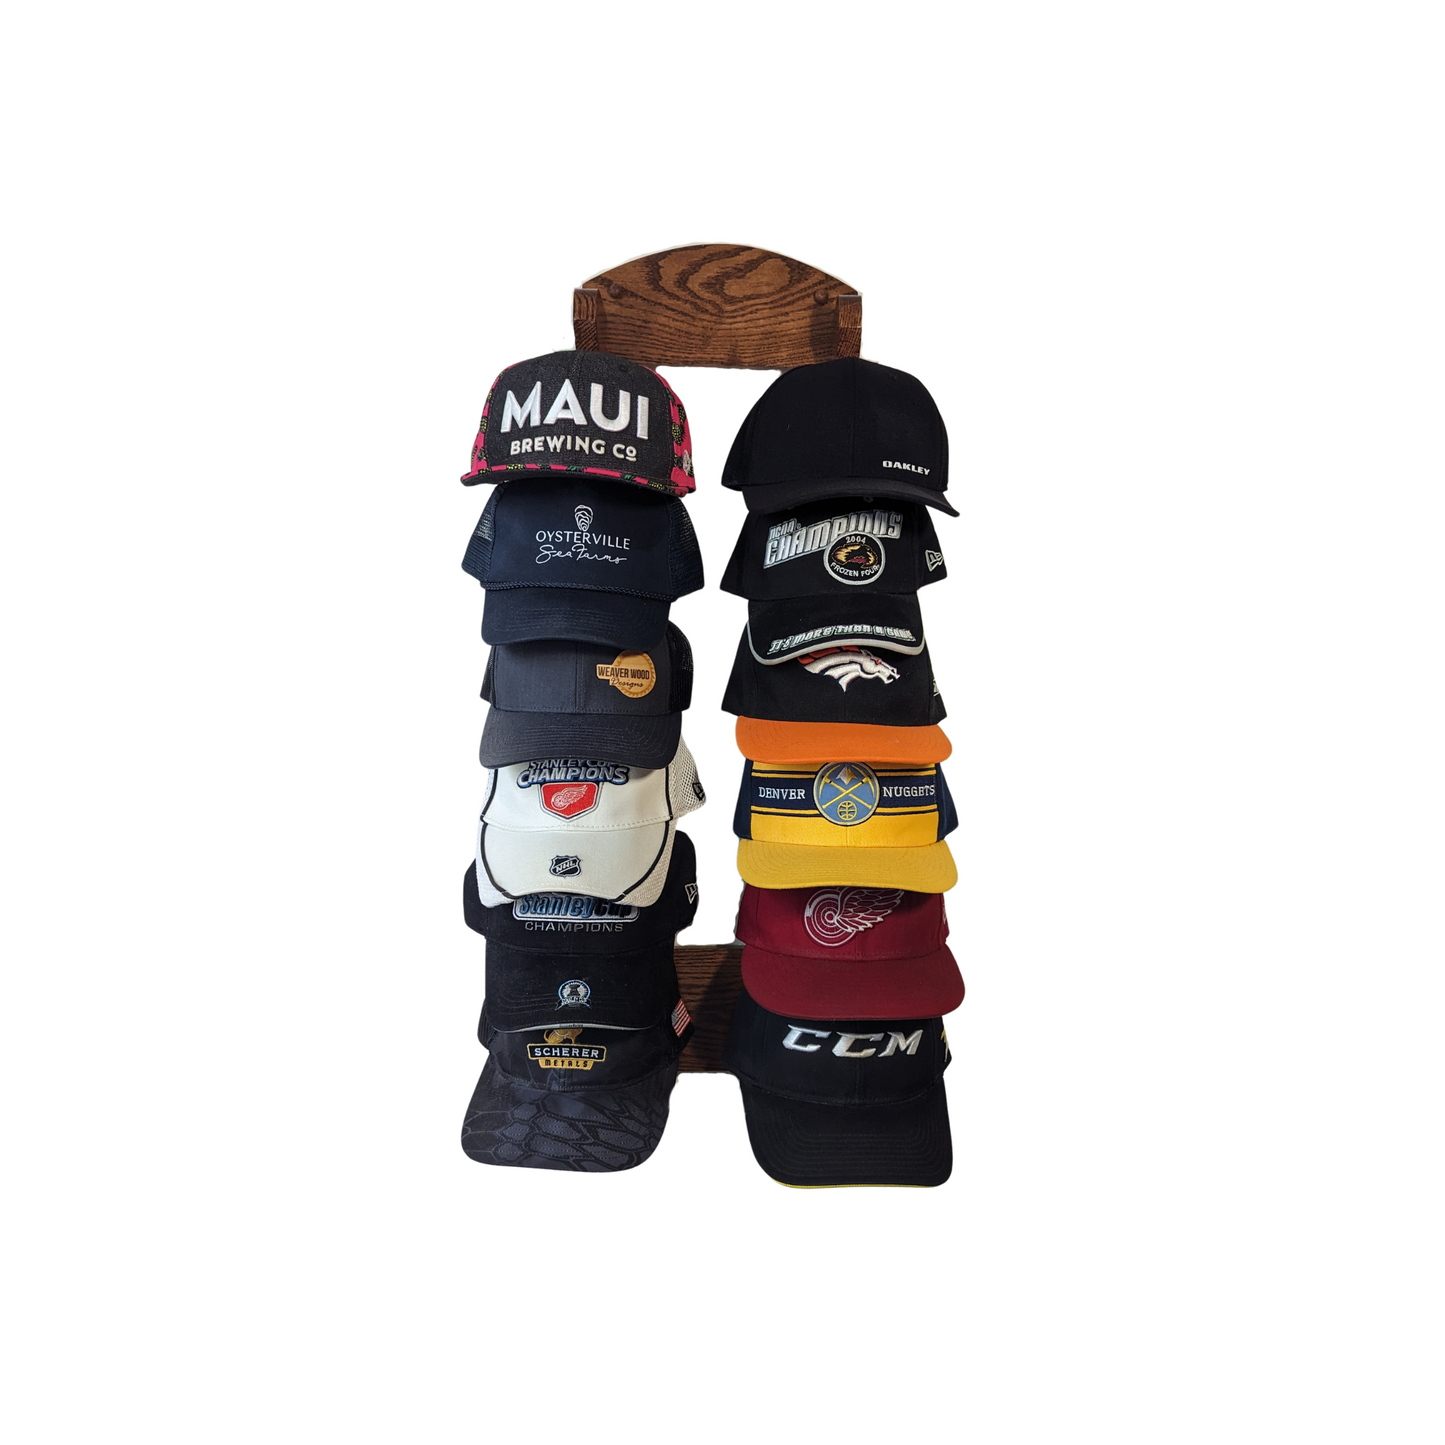 Hat Rack Solid Oak Wall Mount Baseball Cap Display Rack, Holds 12 Hats